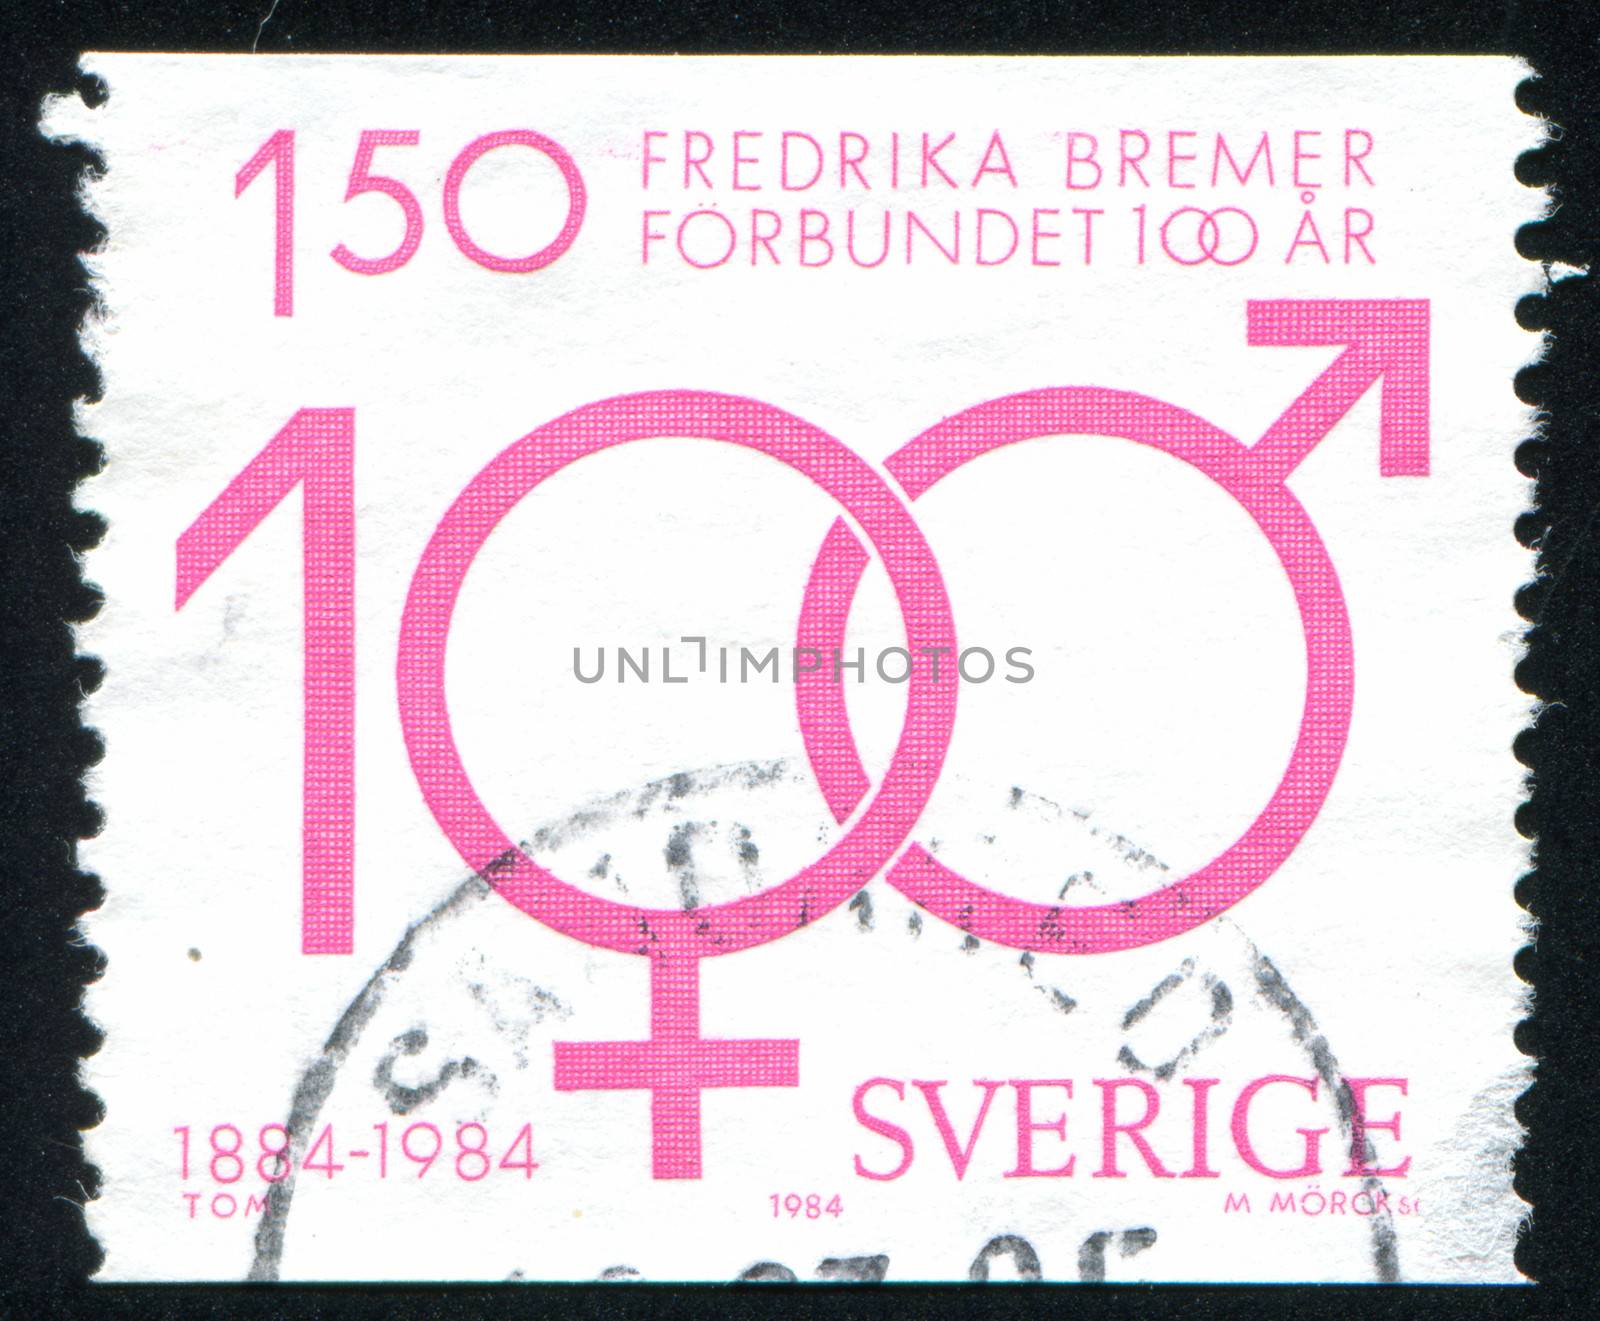 Fredrika Bremer Association Centenary by rook